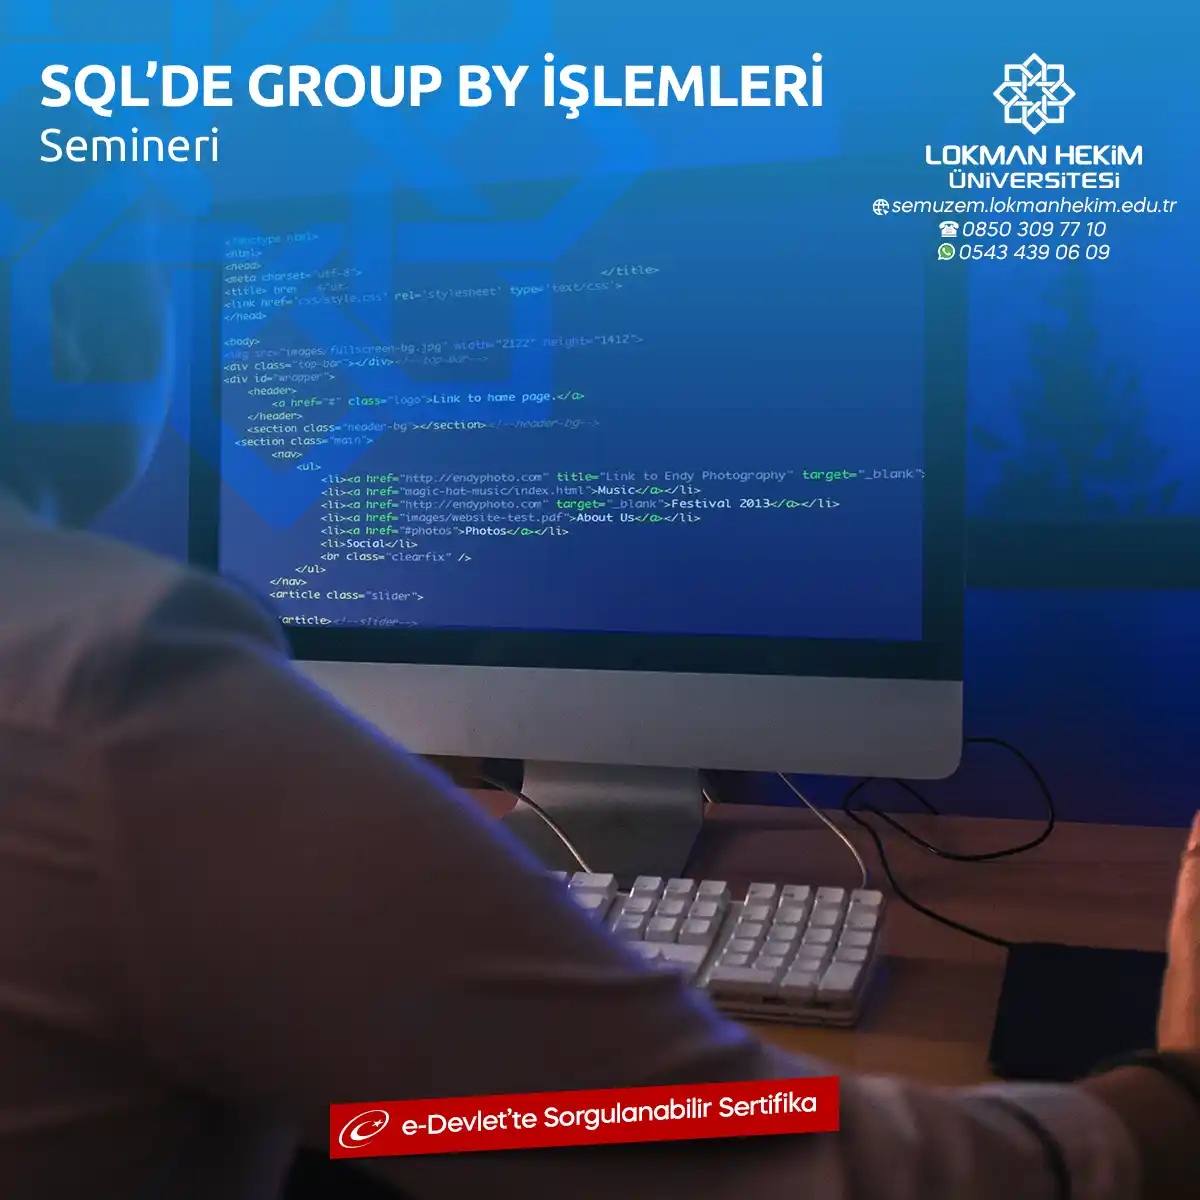 SQL’de Group By İşlemleri Semineri